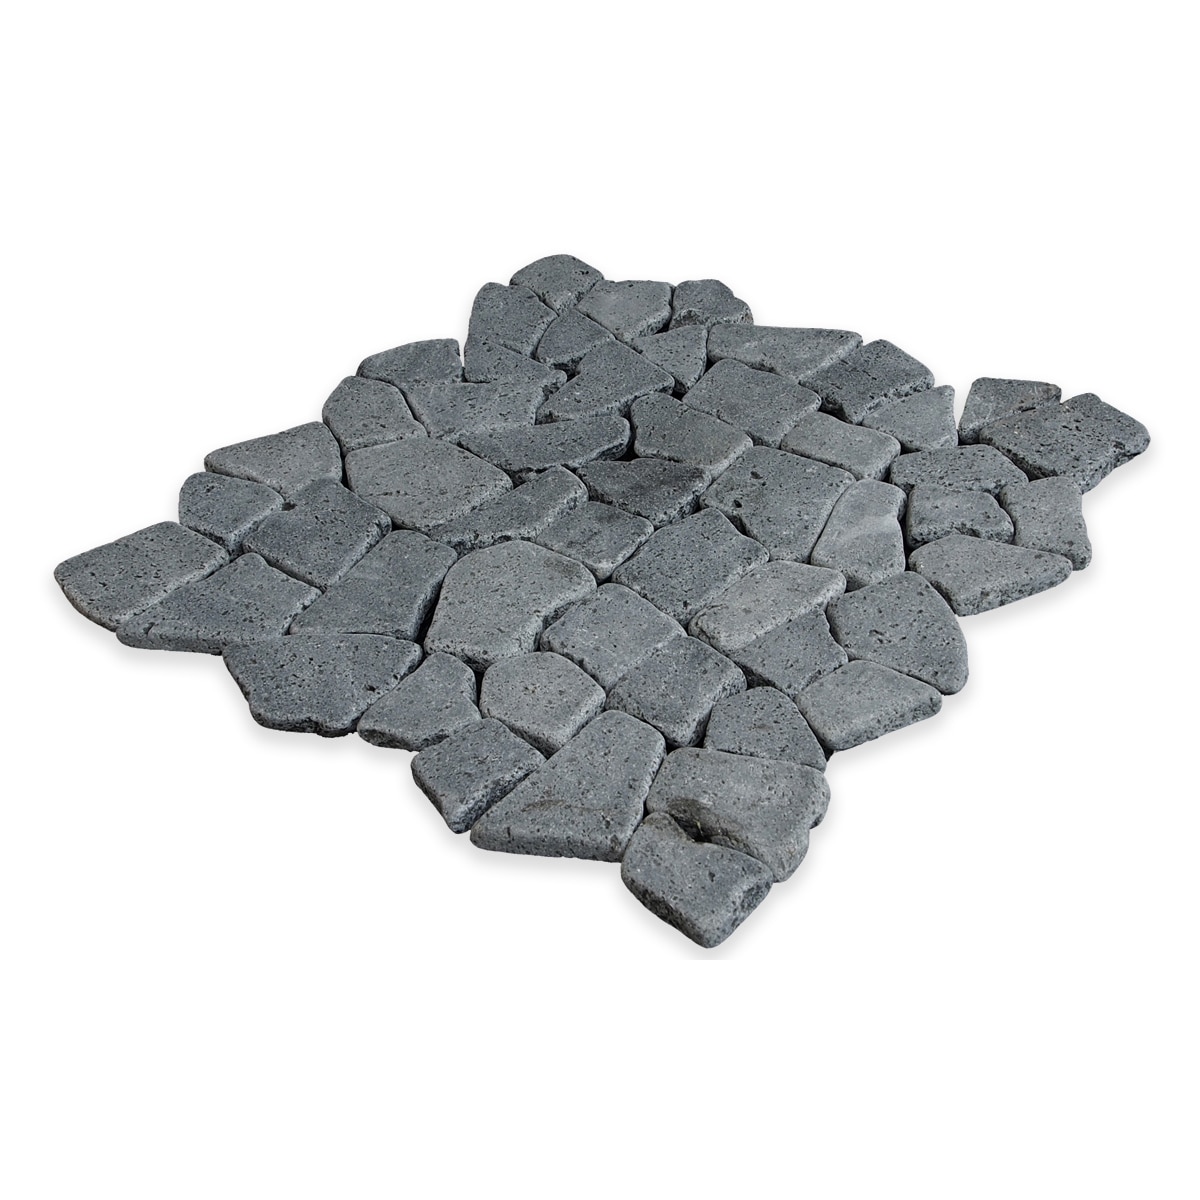 BUY ONLINE: Black Marble Field Tile, 2¾x5½x⅜